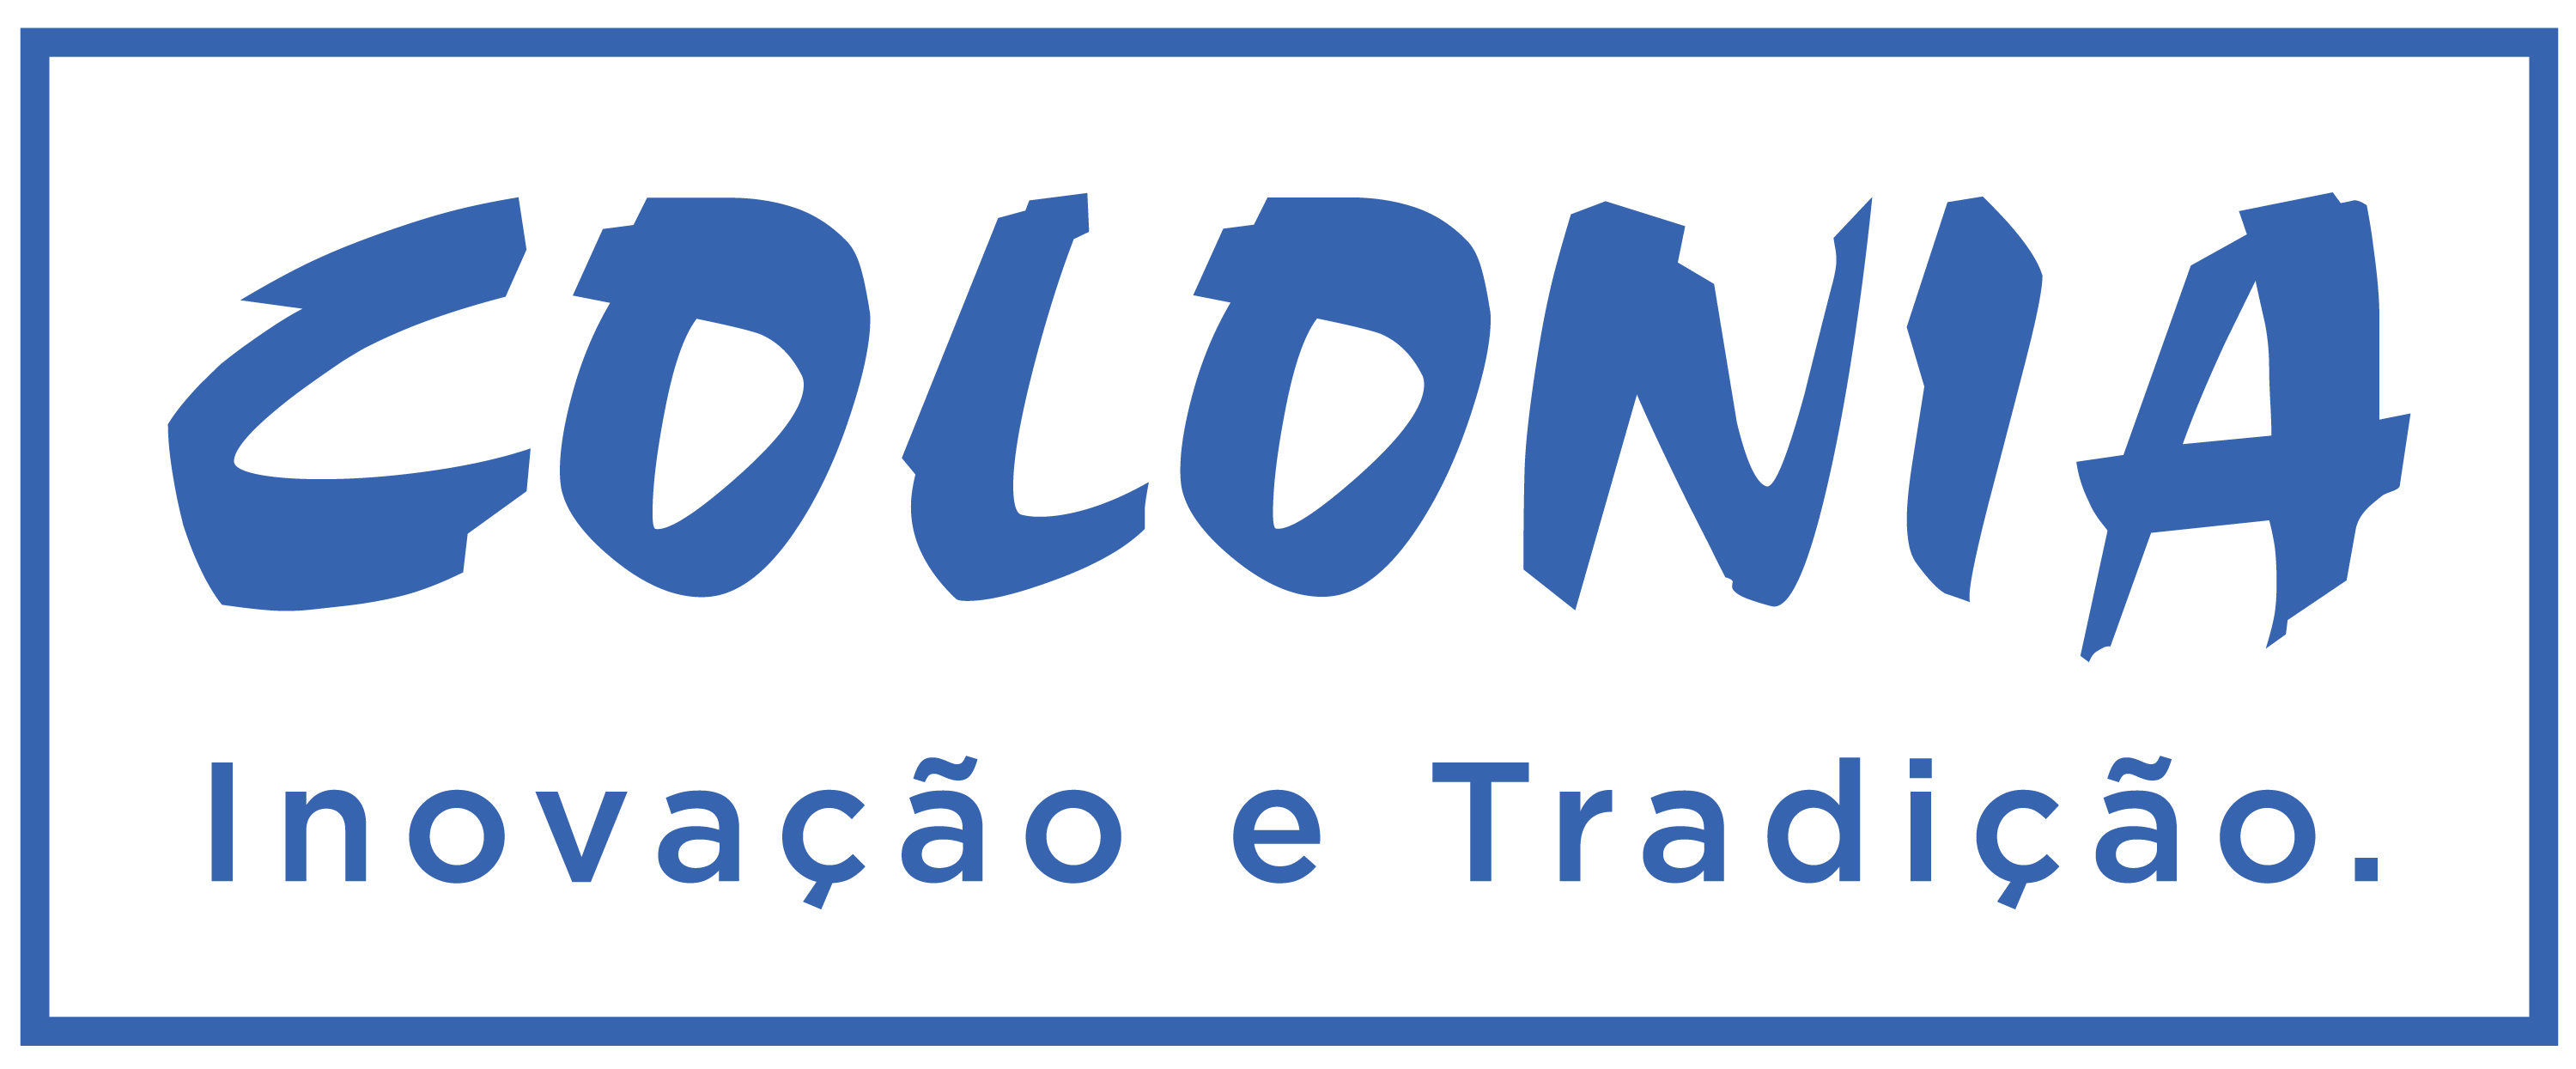 logo_colonia_imoveis_azul.jpg